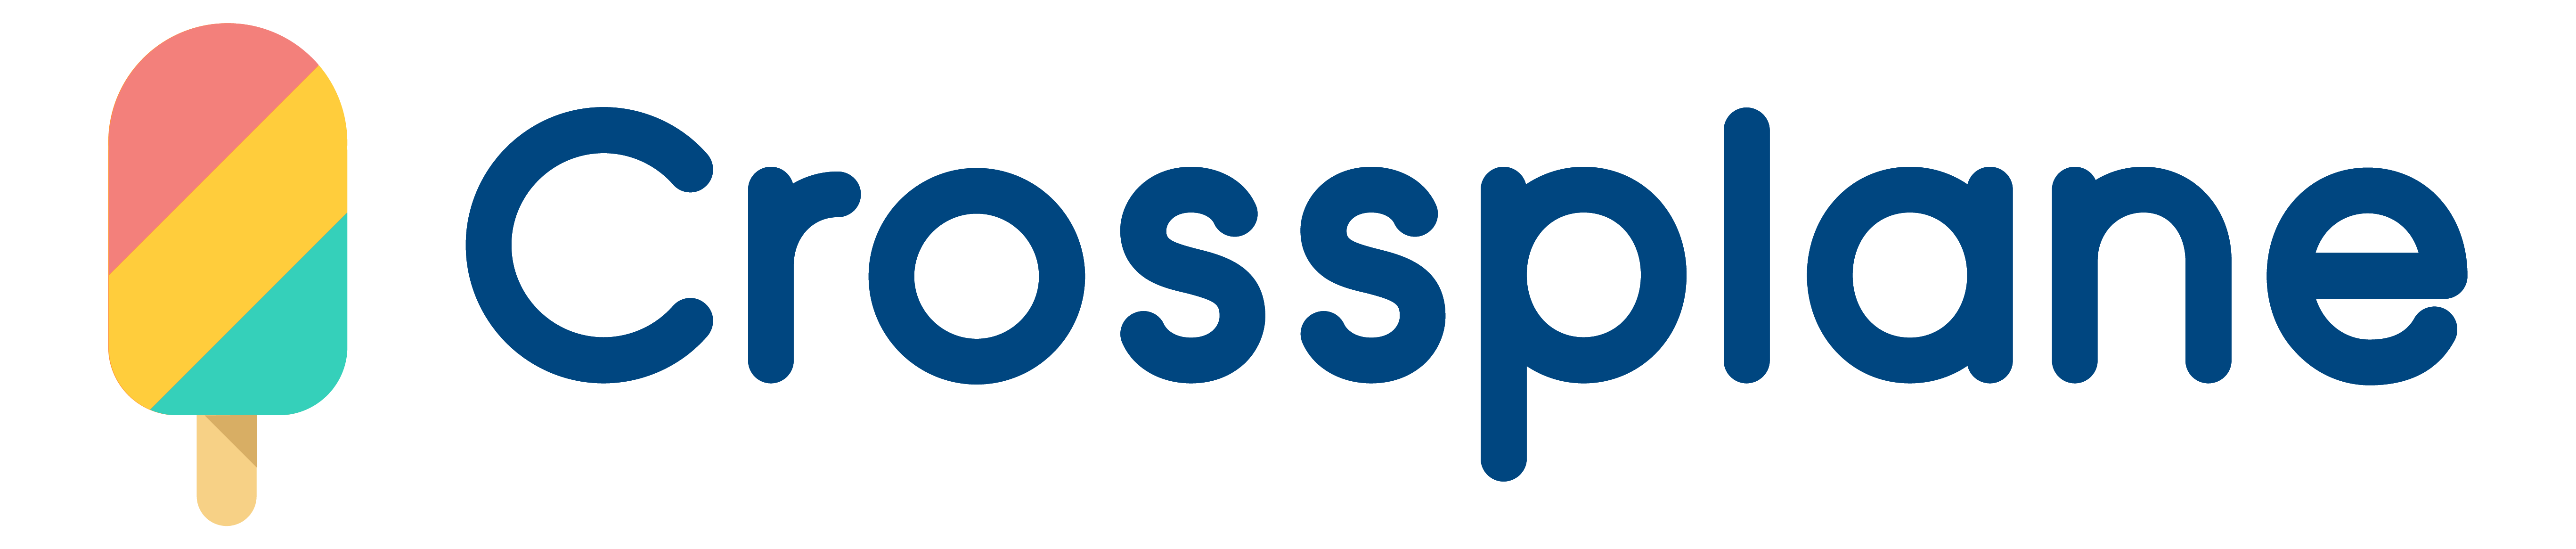 logo-crossplane.png